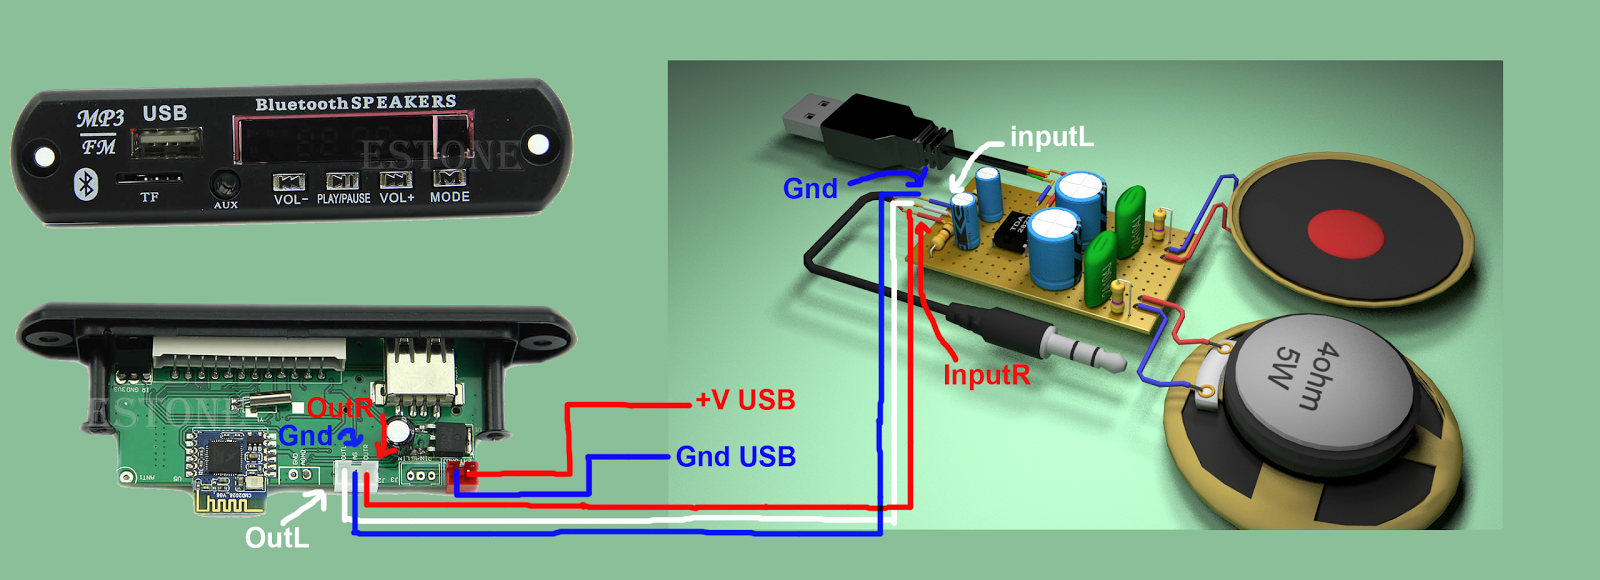 Подключить player. Bluetooth Speakers mp3 fm USB схема. Блютуз модуль для автомагнитолы 12 вольт. Bt2- блютуз модуль USB. Схема подключения декодера мп3.